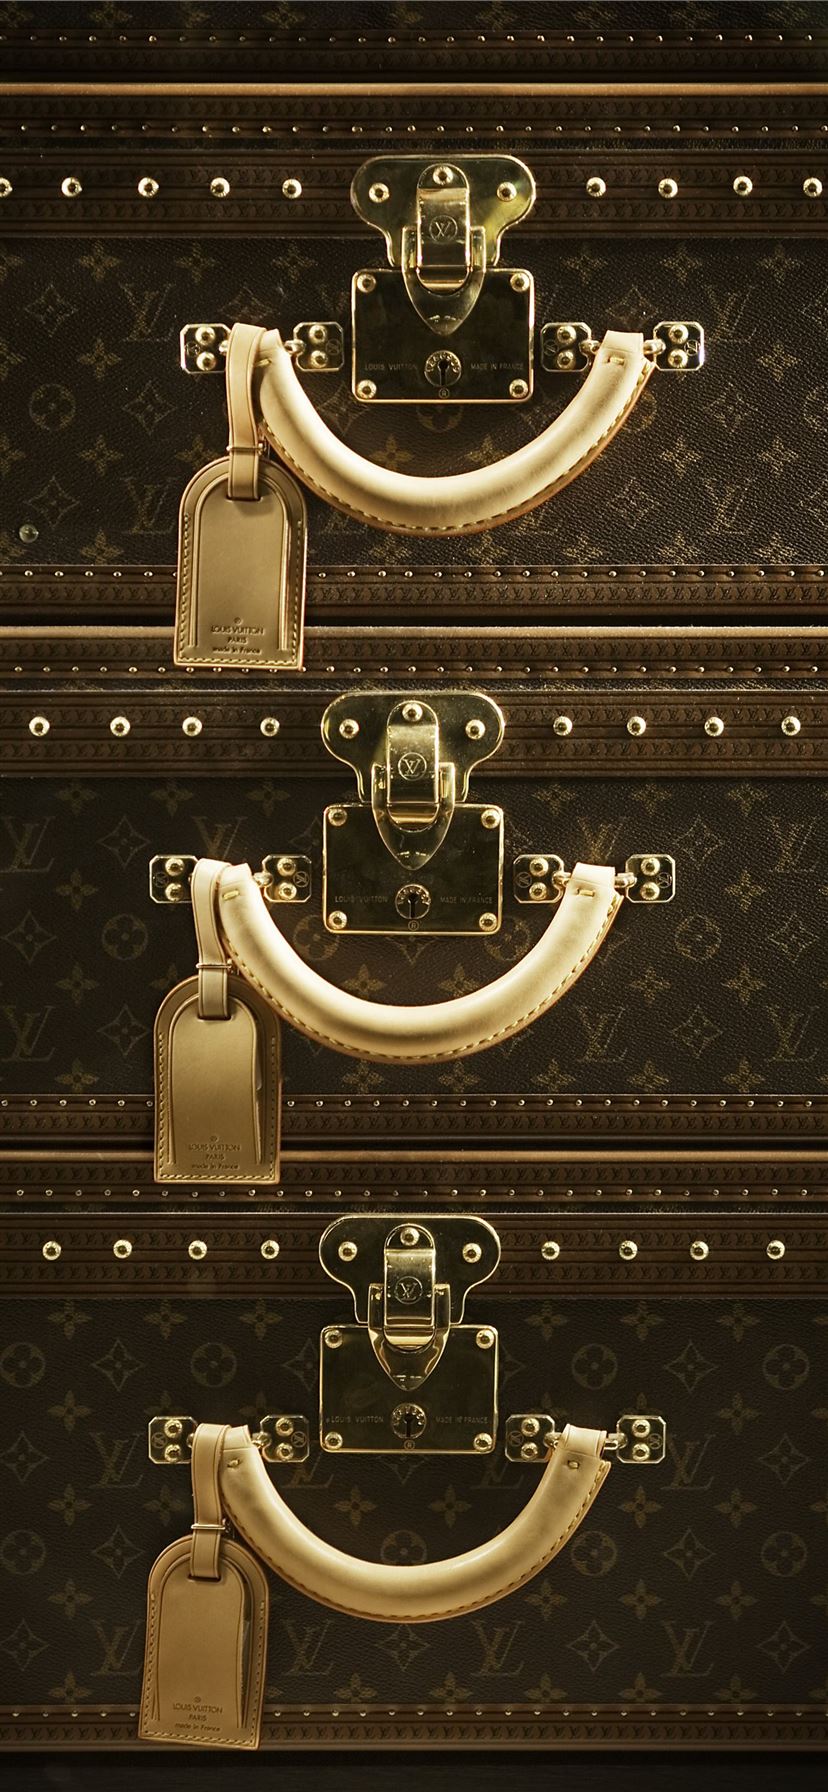 File Berlin Louis Vuitton luggage suitcase set 436. iPhone Wallpaper Free Download